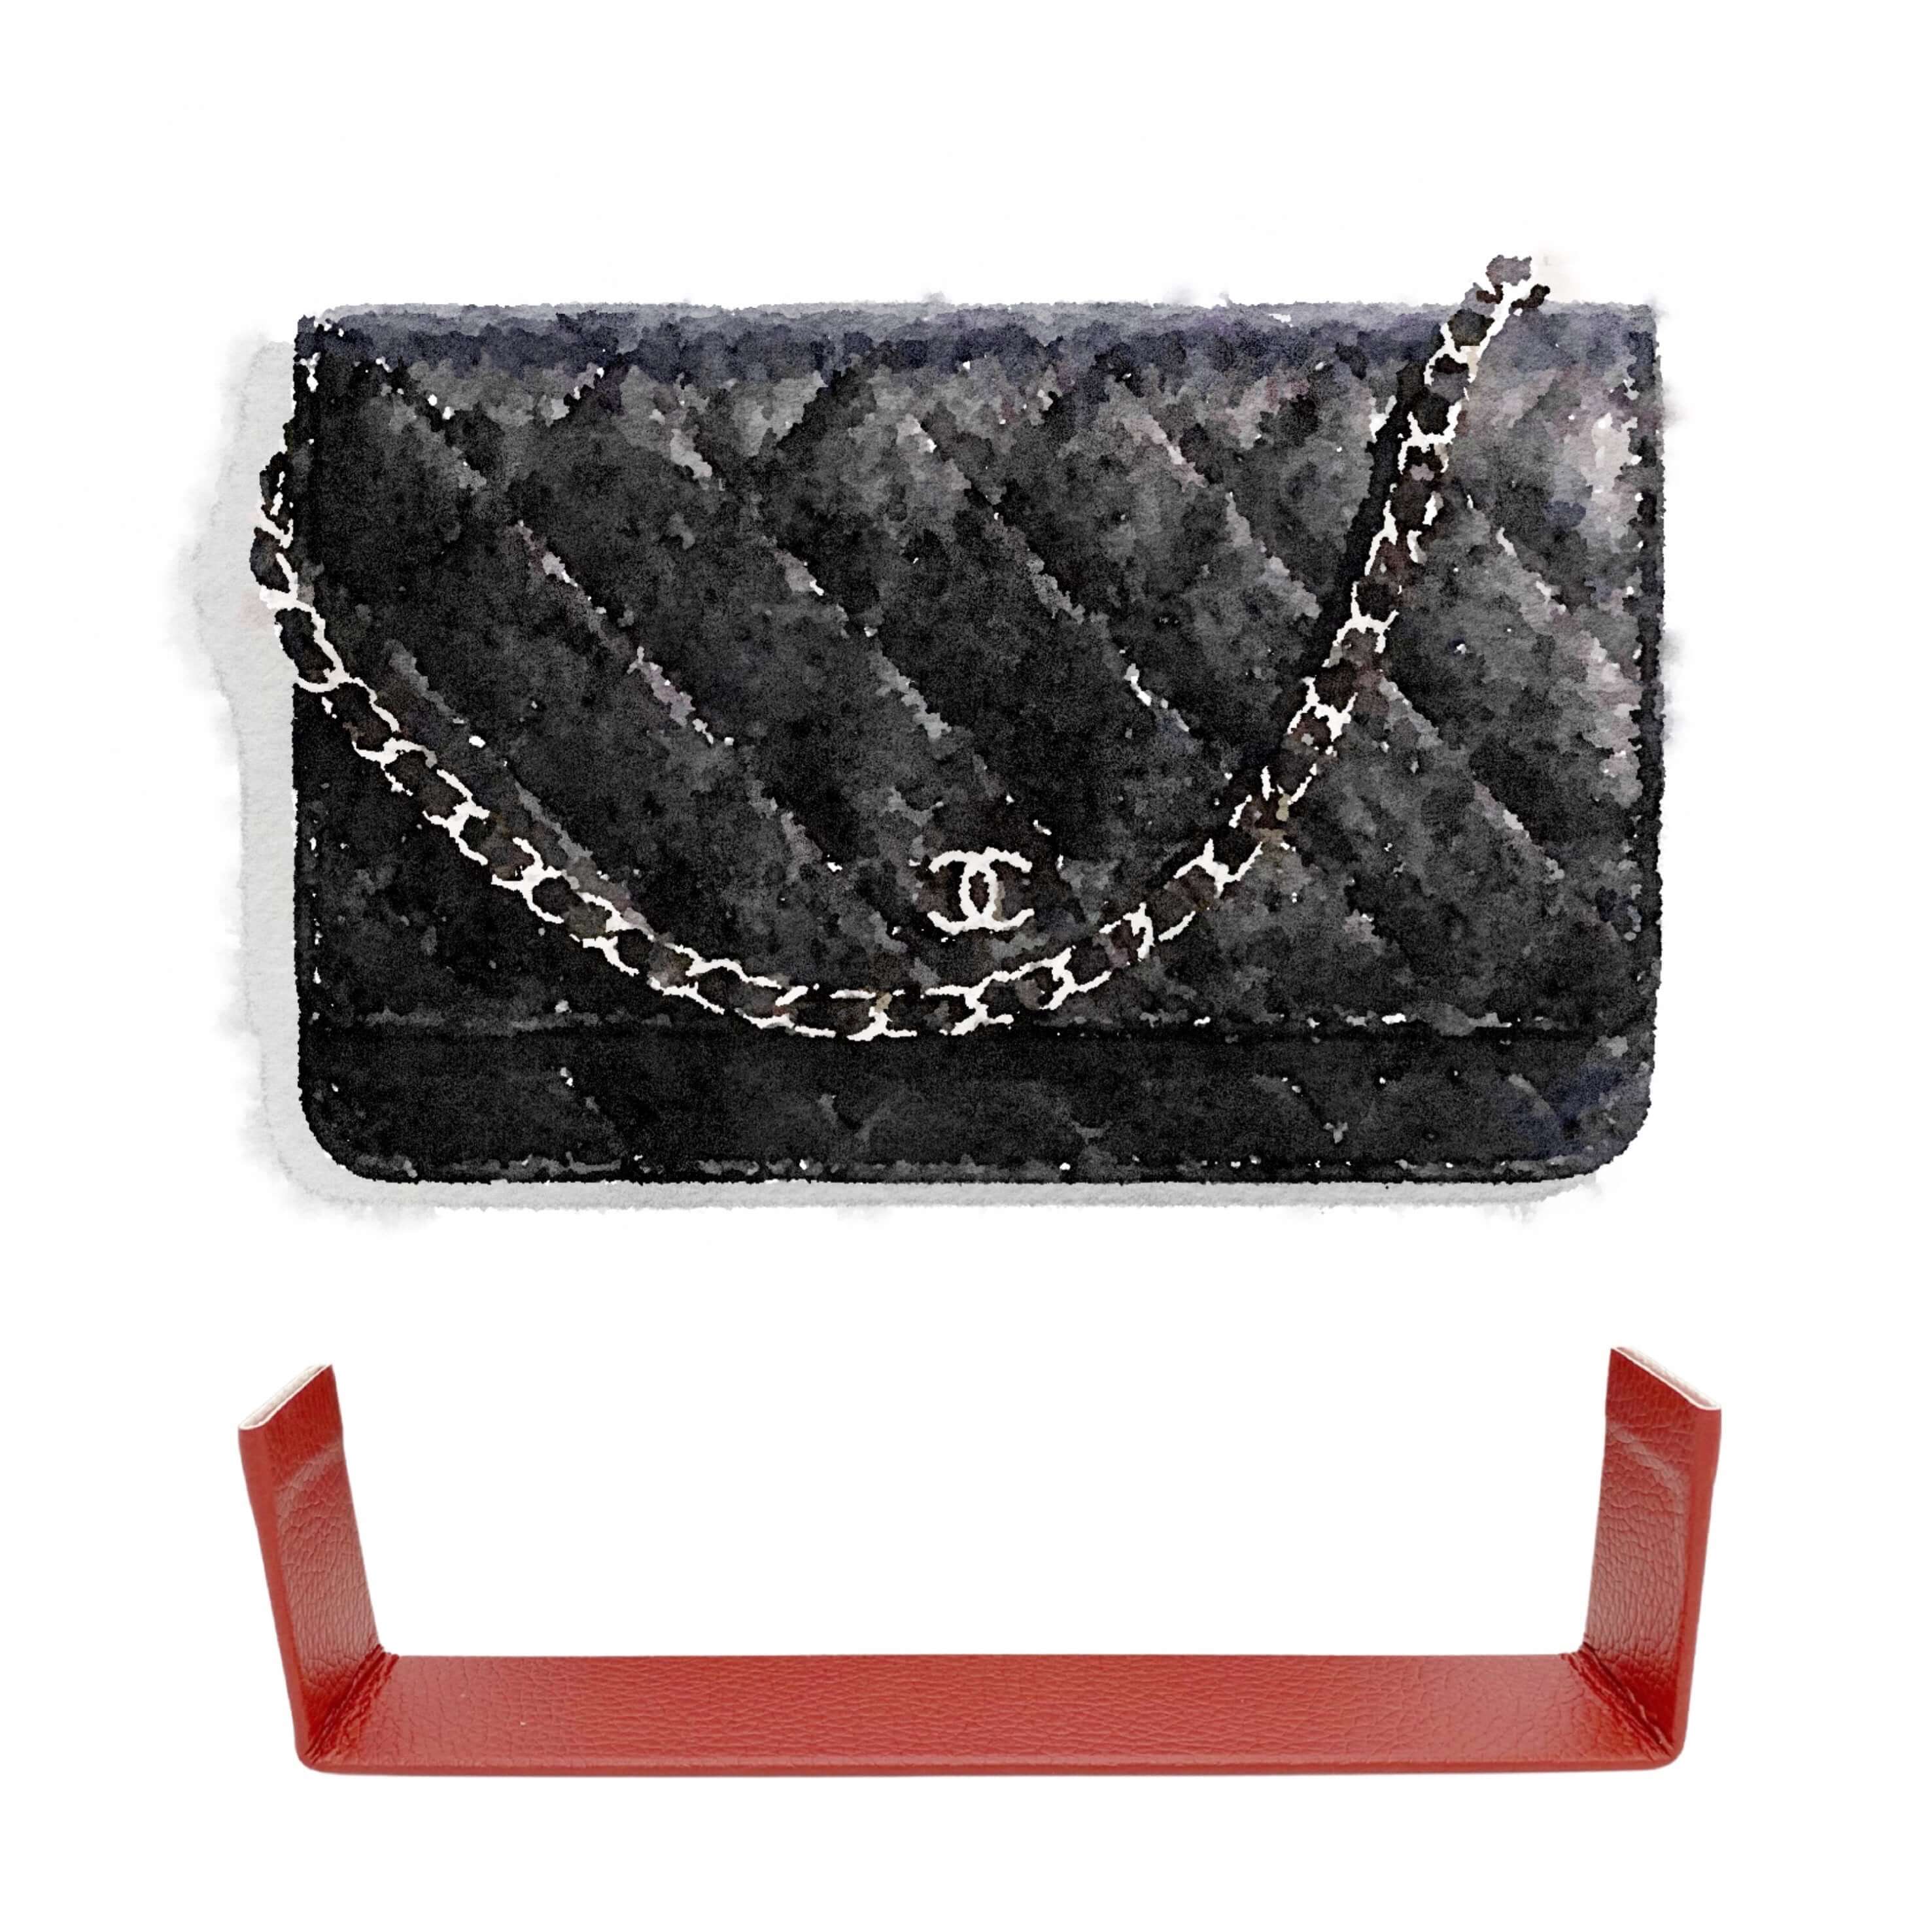 Base Shaper Insert for Chanel Wallet On Chain purse – Luxegarde